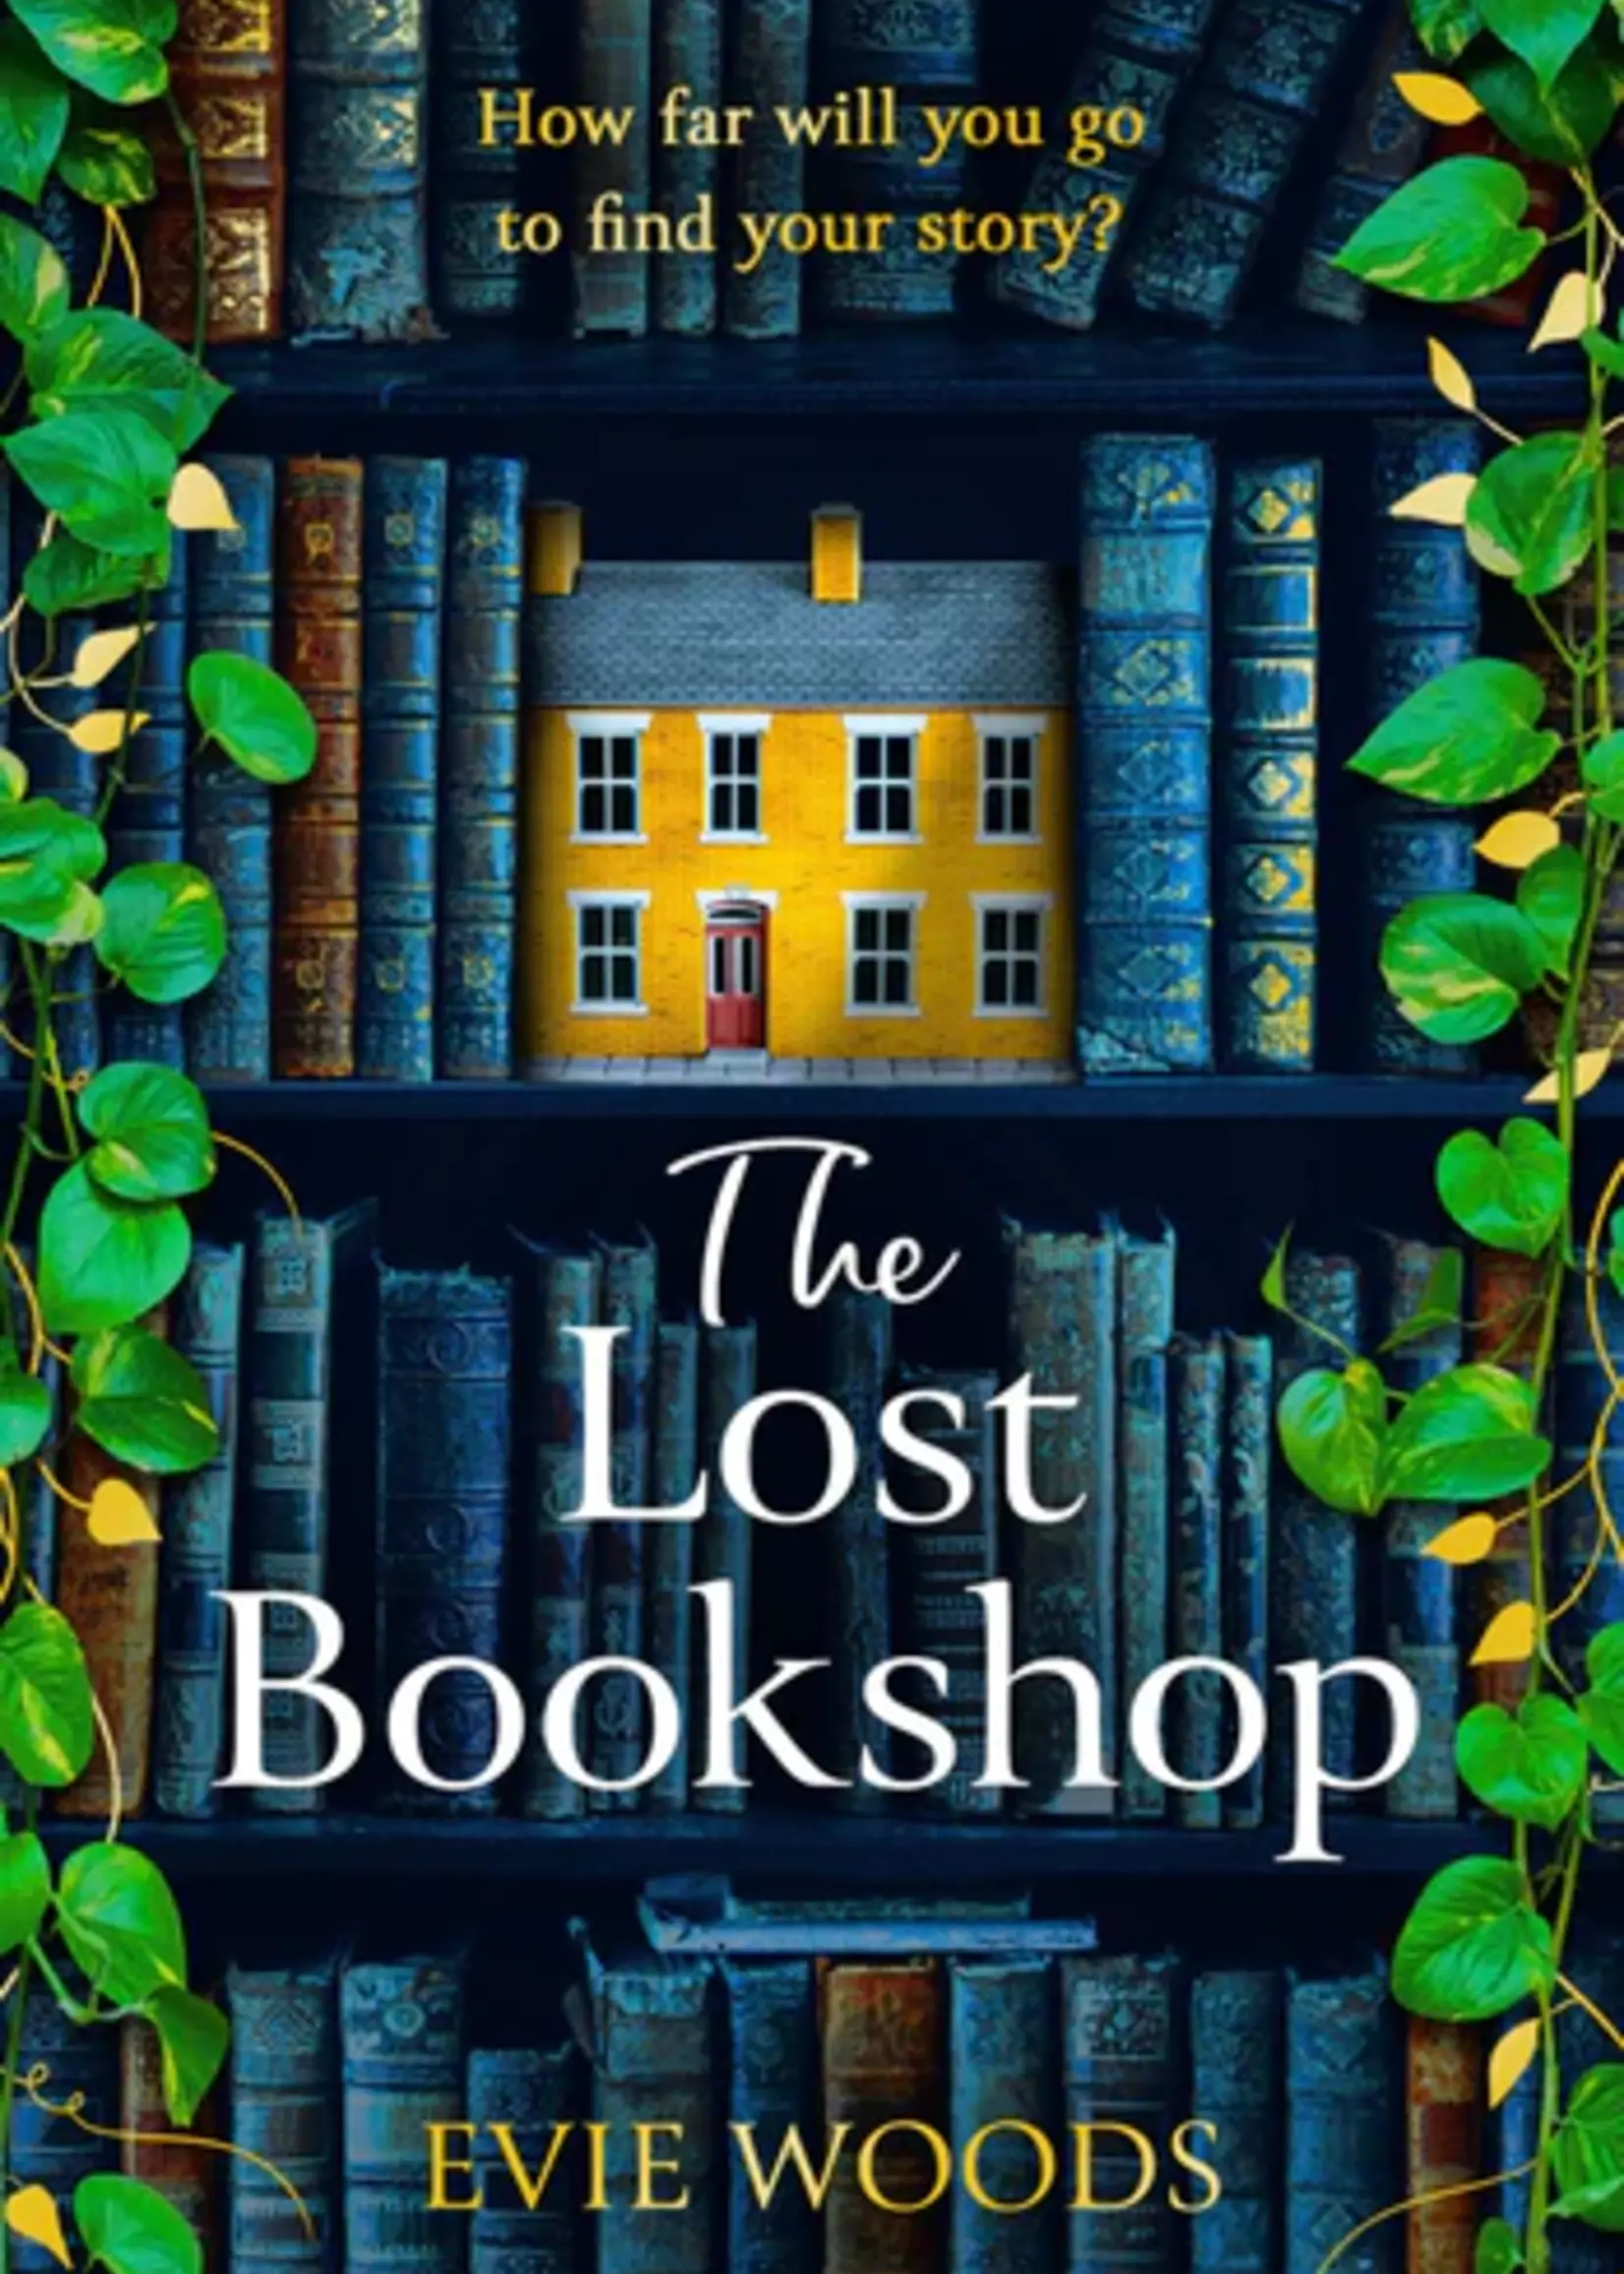 The Lost Bookshop (N)